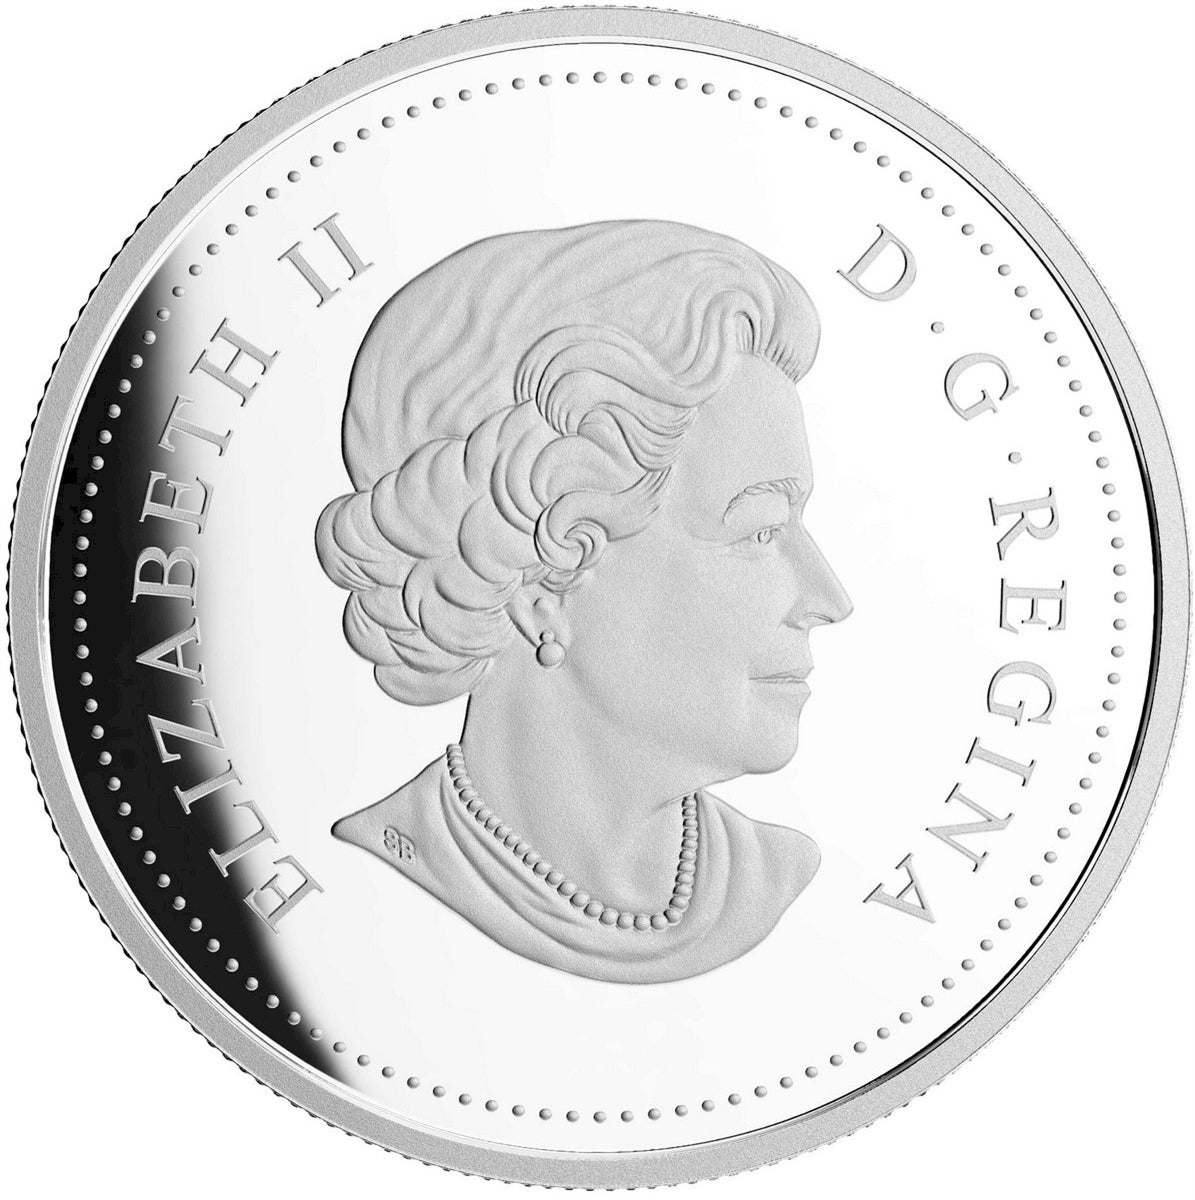 2015 $20 Canadian Icons: Polar Bear with Jade Fine Silver